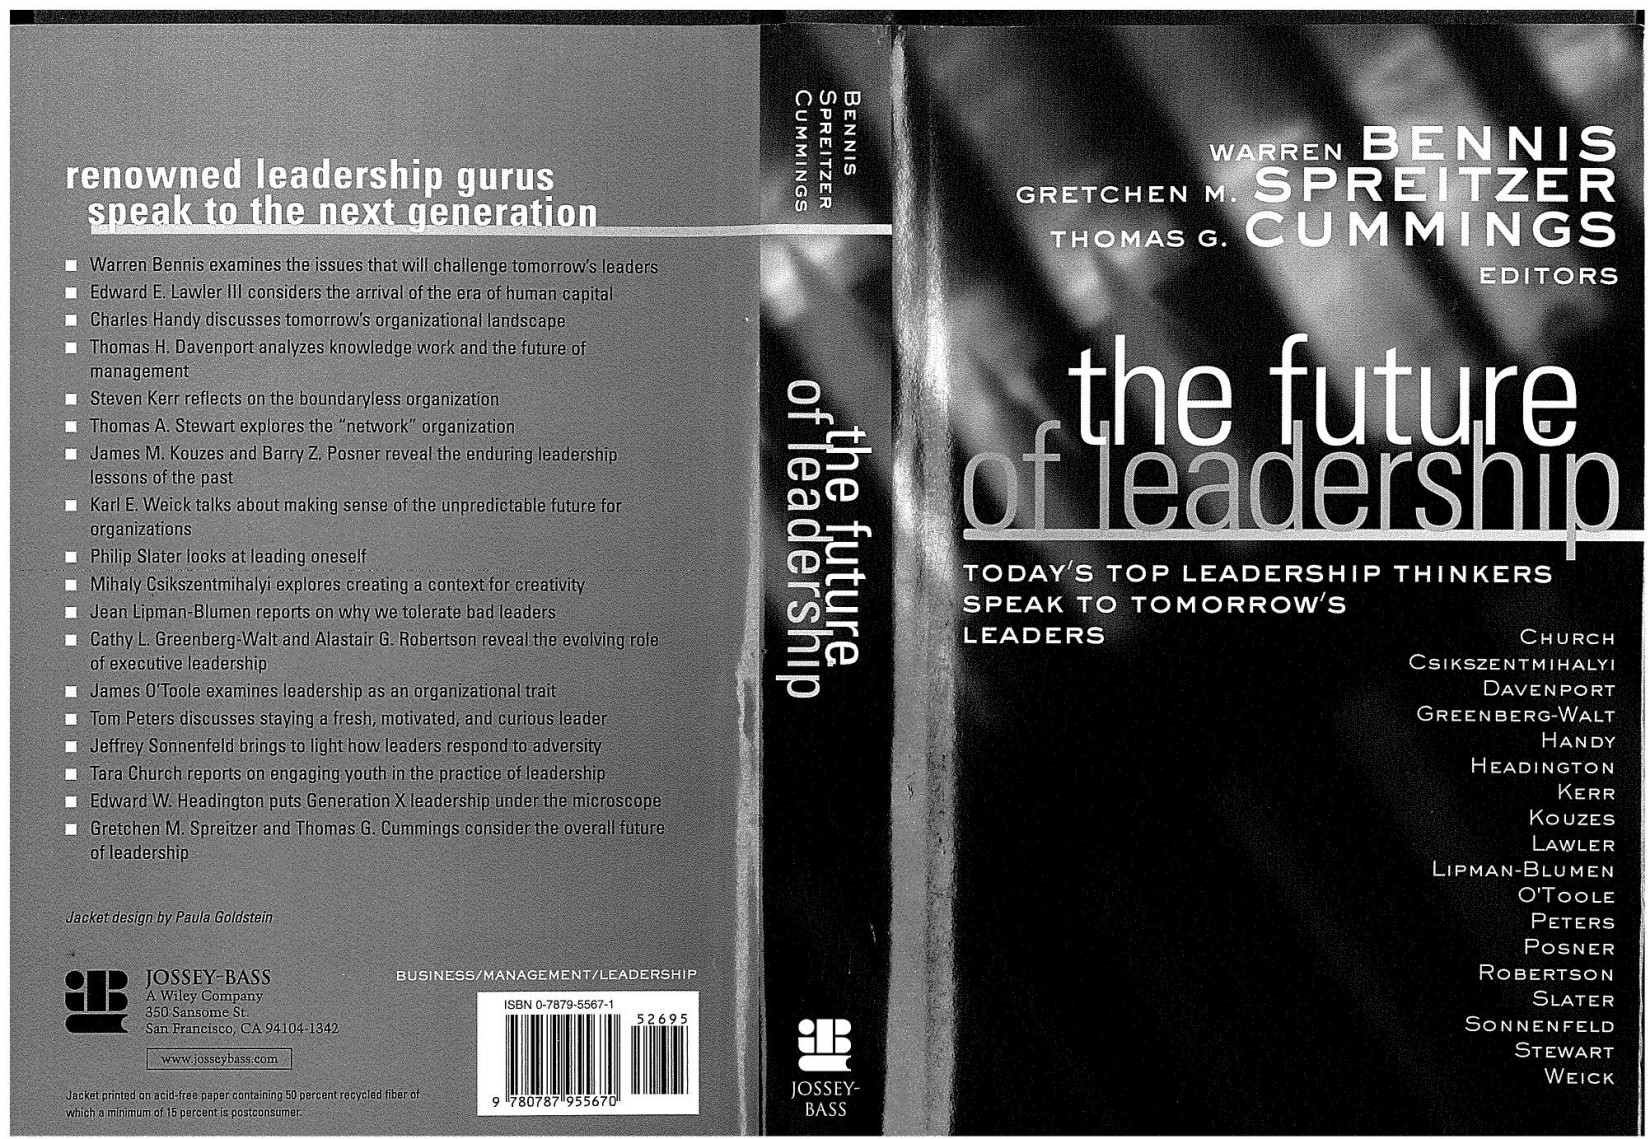 Thomas Cummings, Warren Bennis, Gretchen M. Spreitzer, Thomas G. Cummings The Future of Leadership Todays Top Leadership Thinkers Speak to Tomorrows Leaders 2001